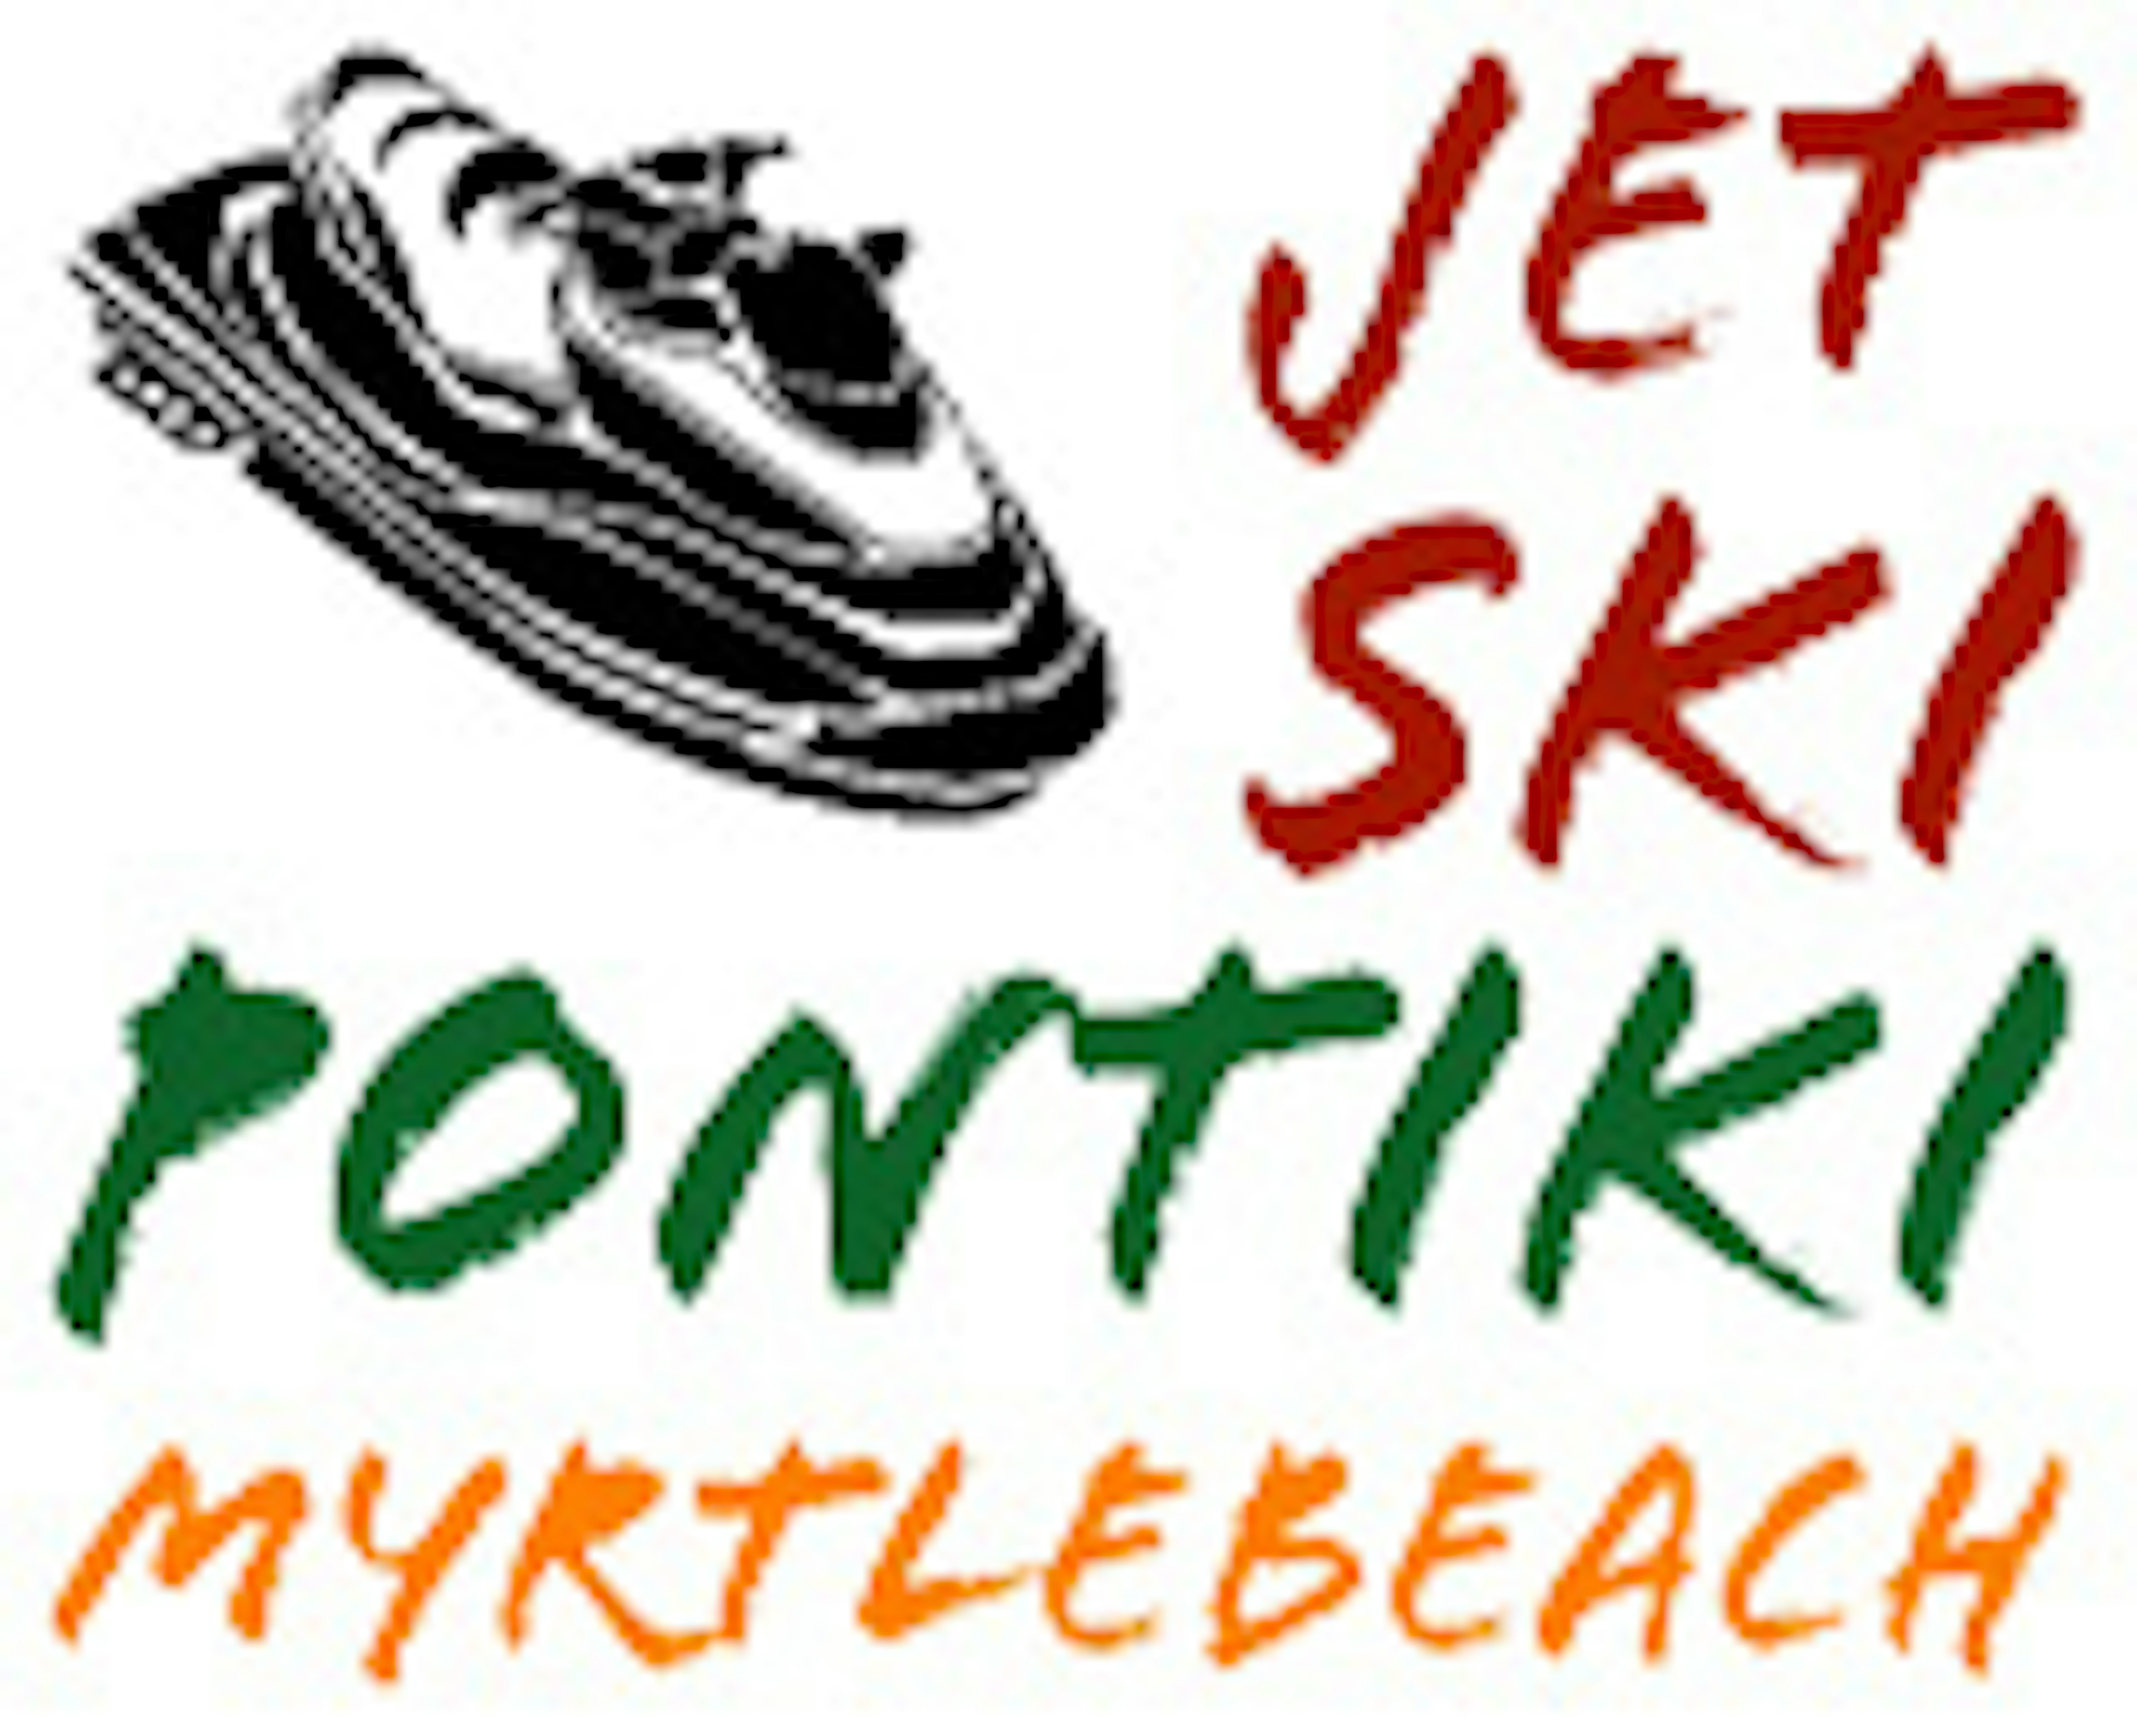 Jet Ski Pontiki Myrtle Beach